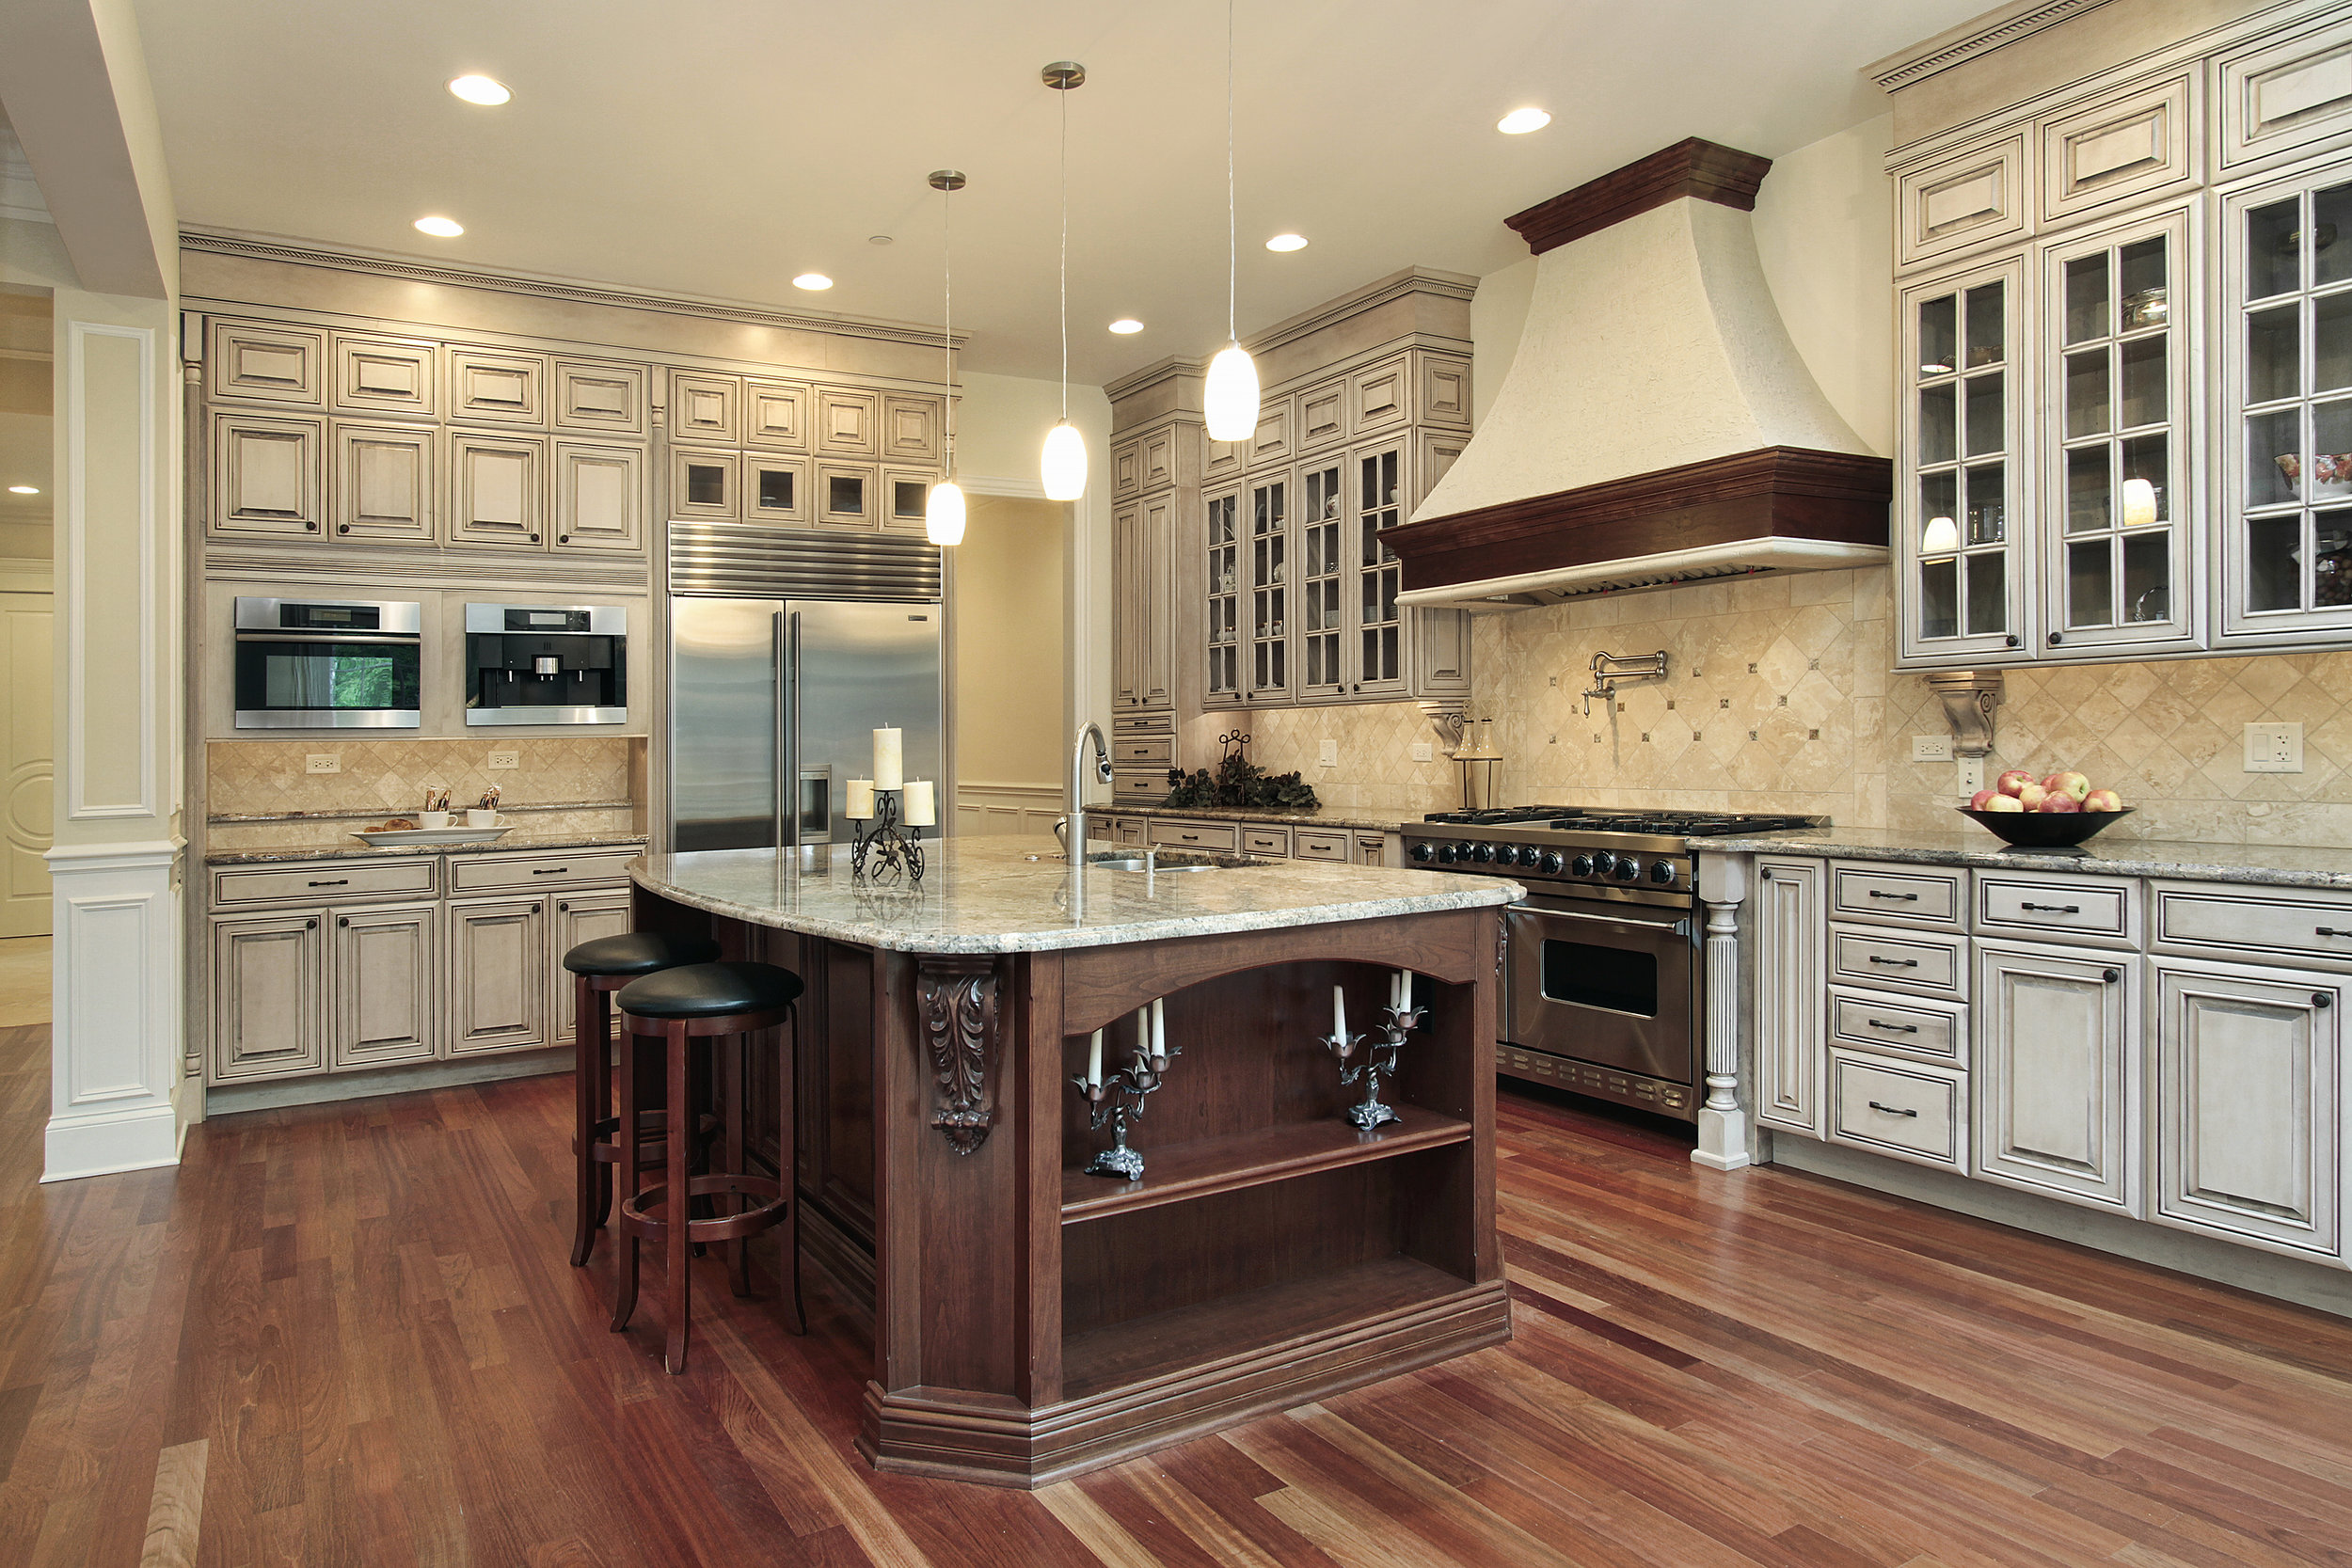 bigstock-Kitchen-in-luxury-home-with-re-16568345.jpg